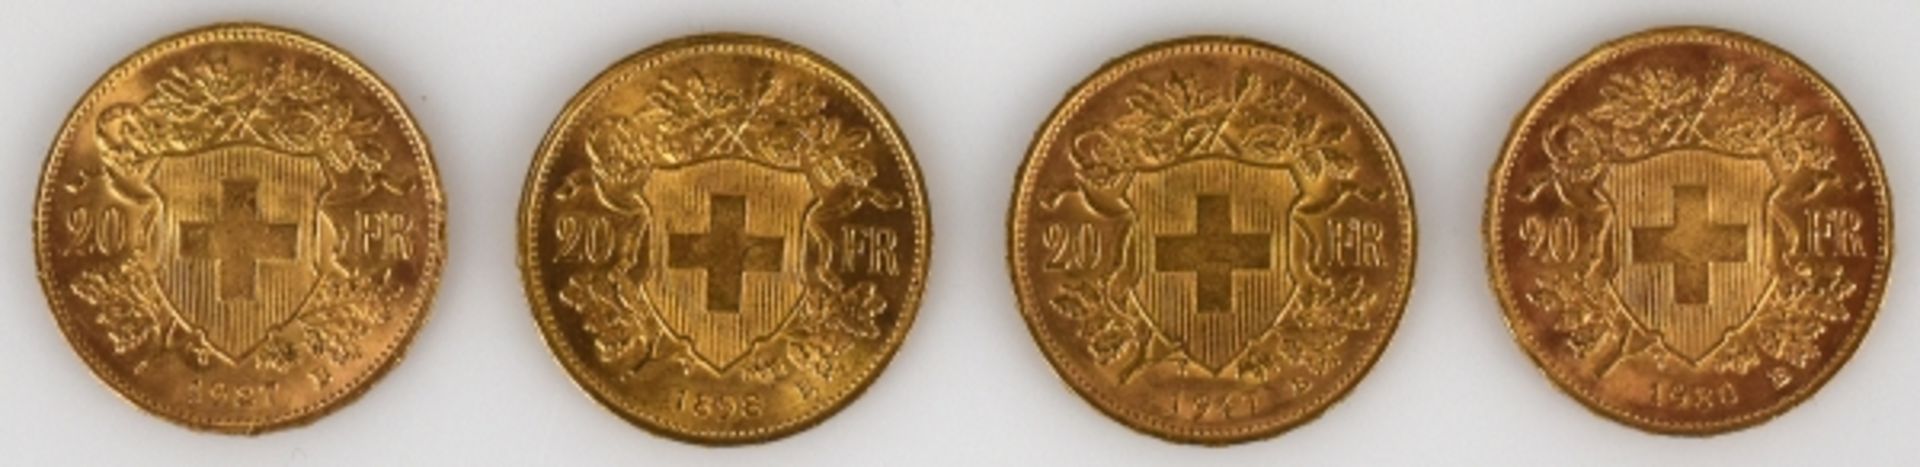 4 GOLDMÜNZEN 20Fr. (Vreneli) Schweiz, 1898, 1927, 1947, 1980, gesamt 25,8g